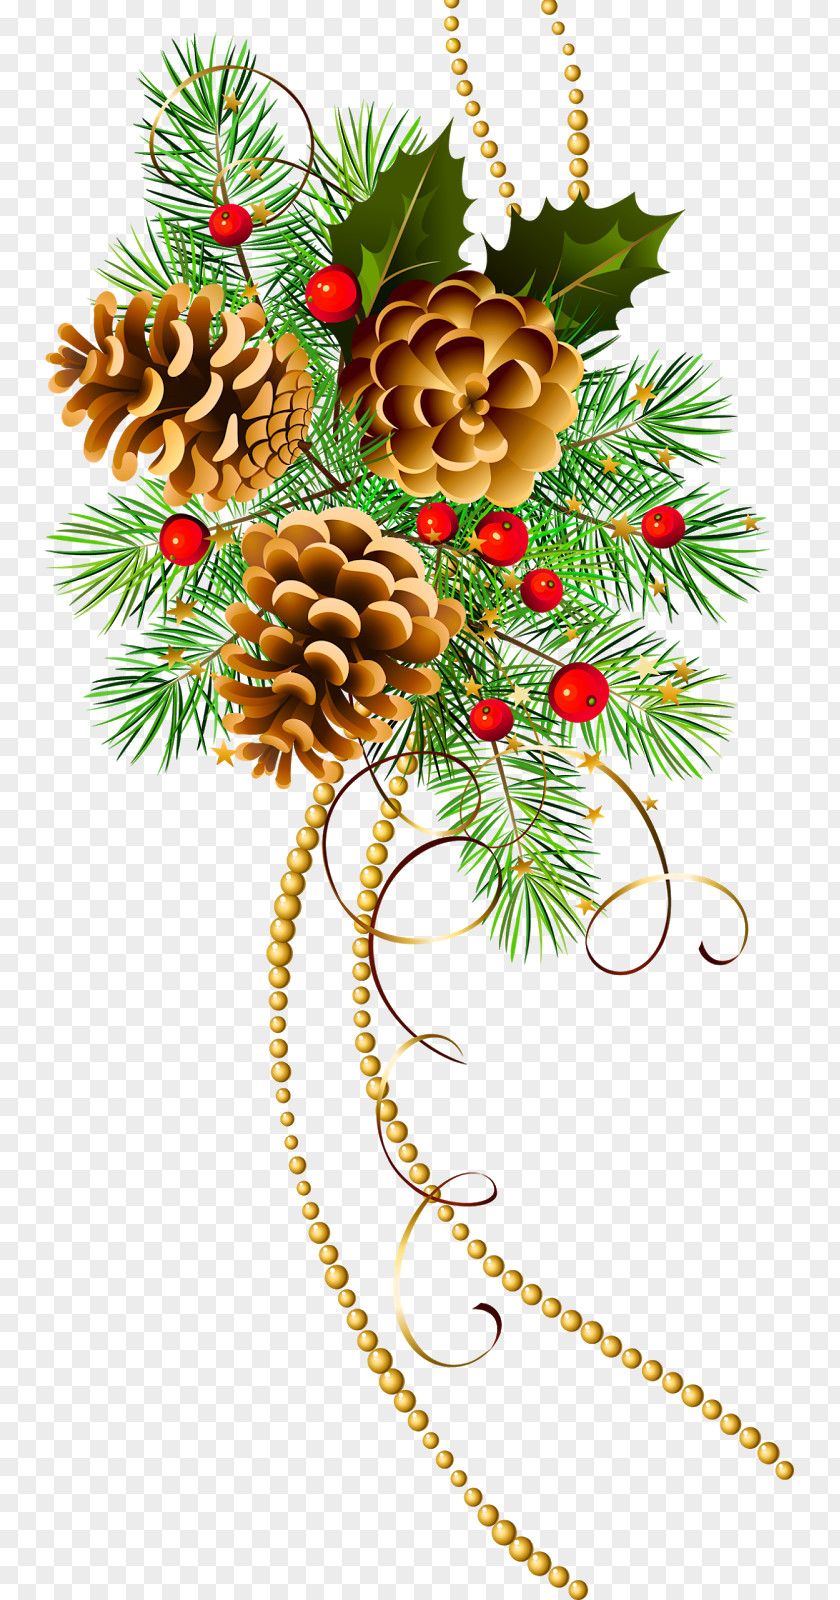 Pine Branches Buckle Free Photos Christmas Ornament Santa Claus Decoration Clip Art PNG